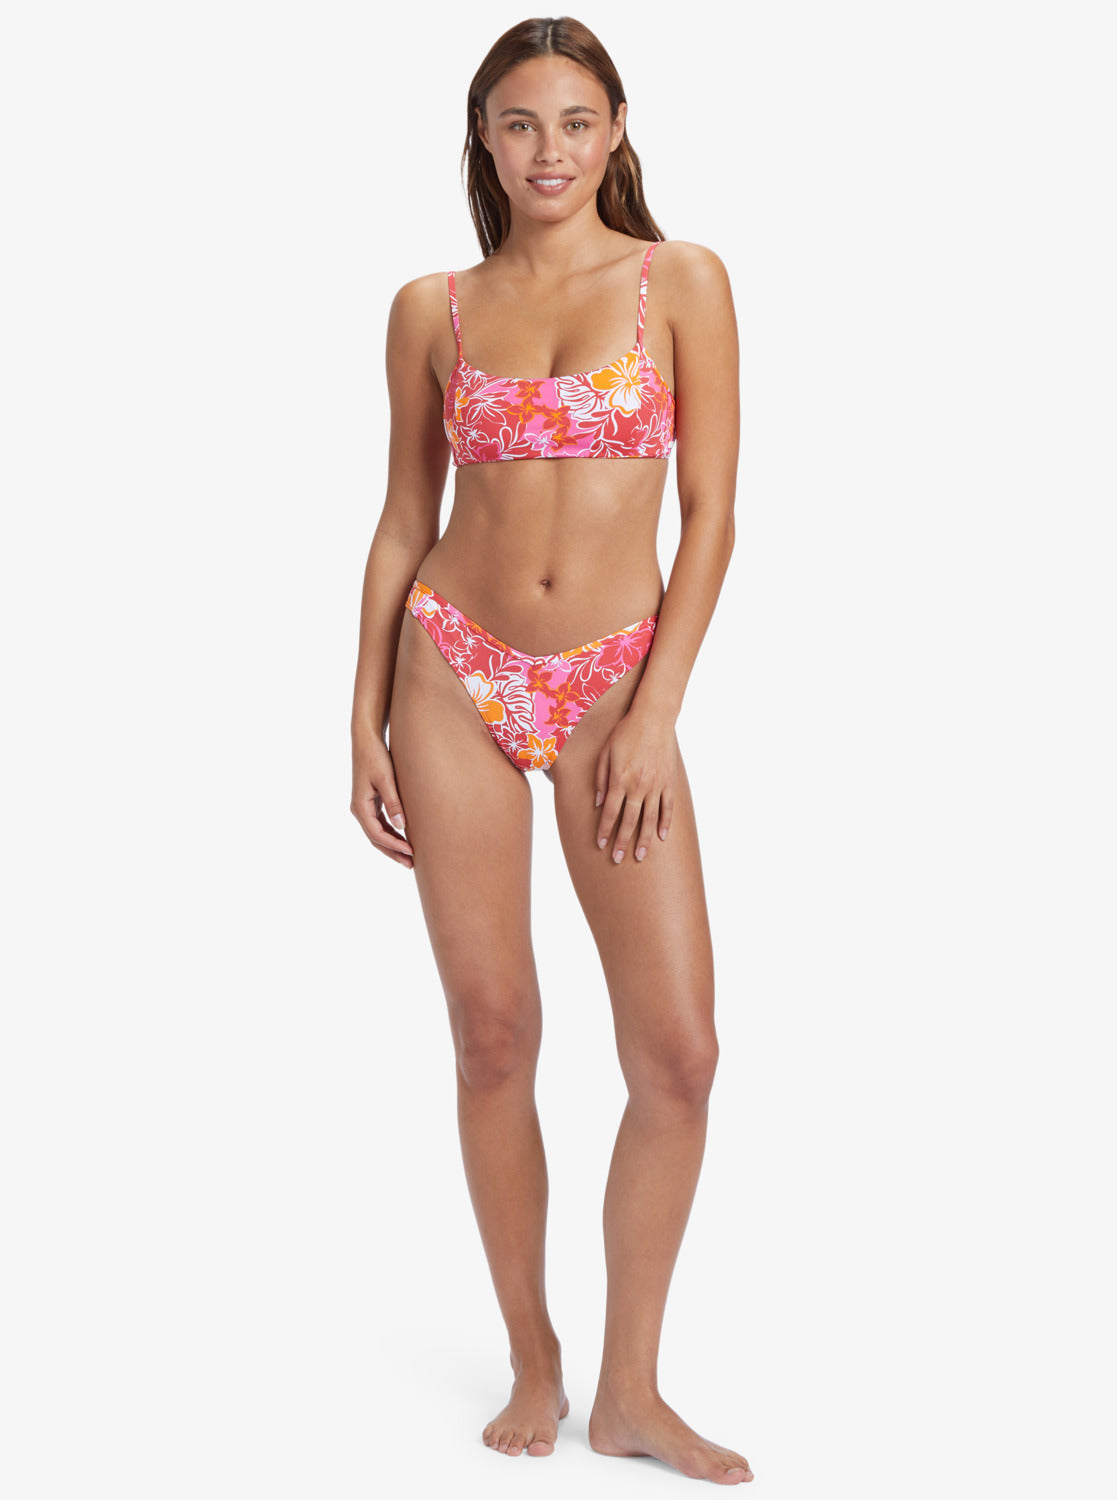 Roxy Sea Spray Bralette Bikini Top